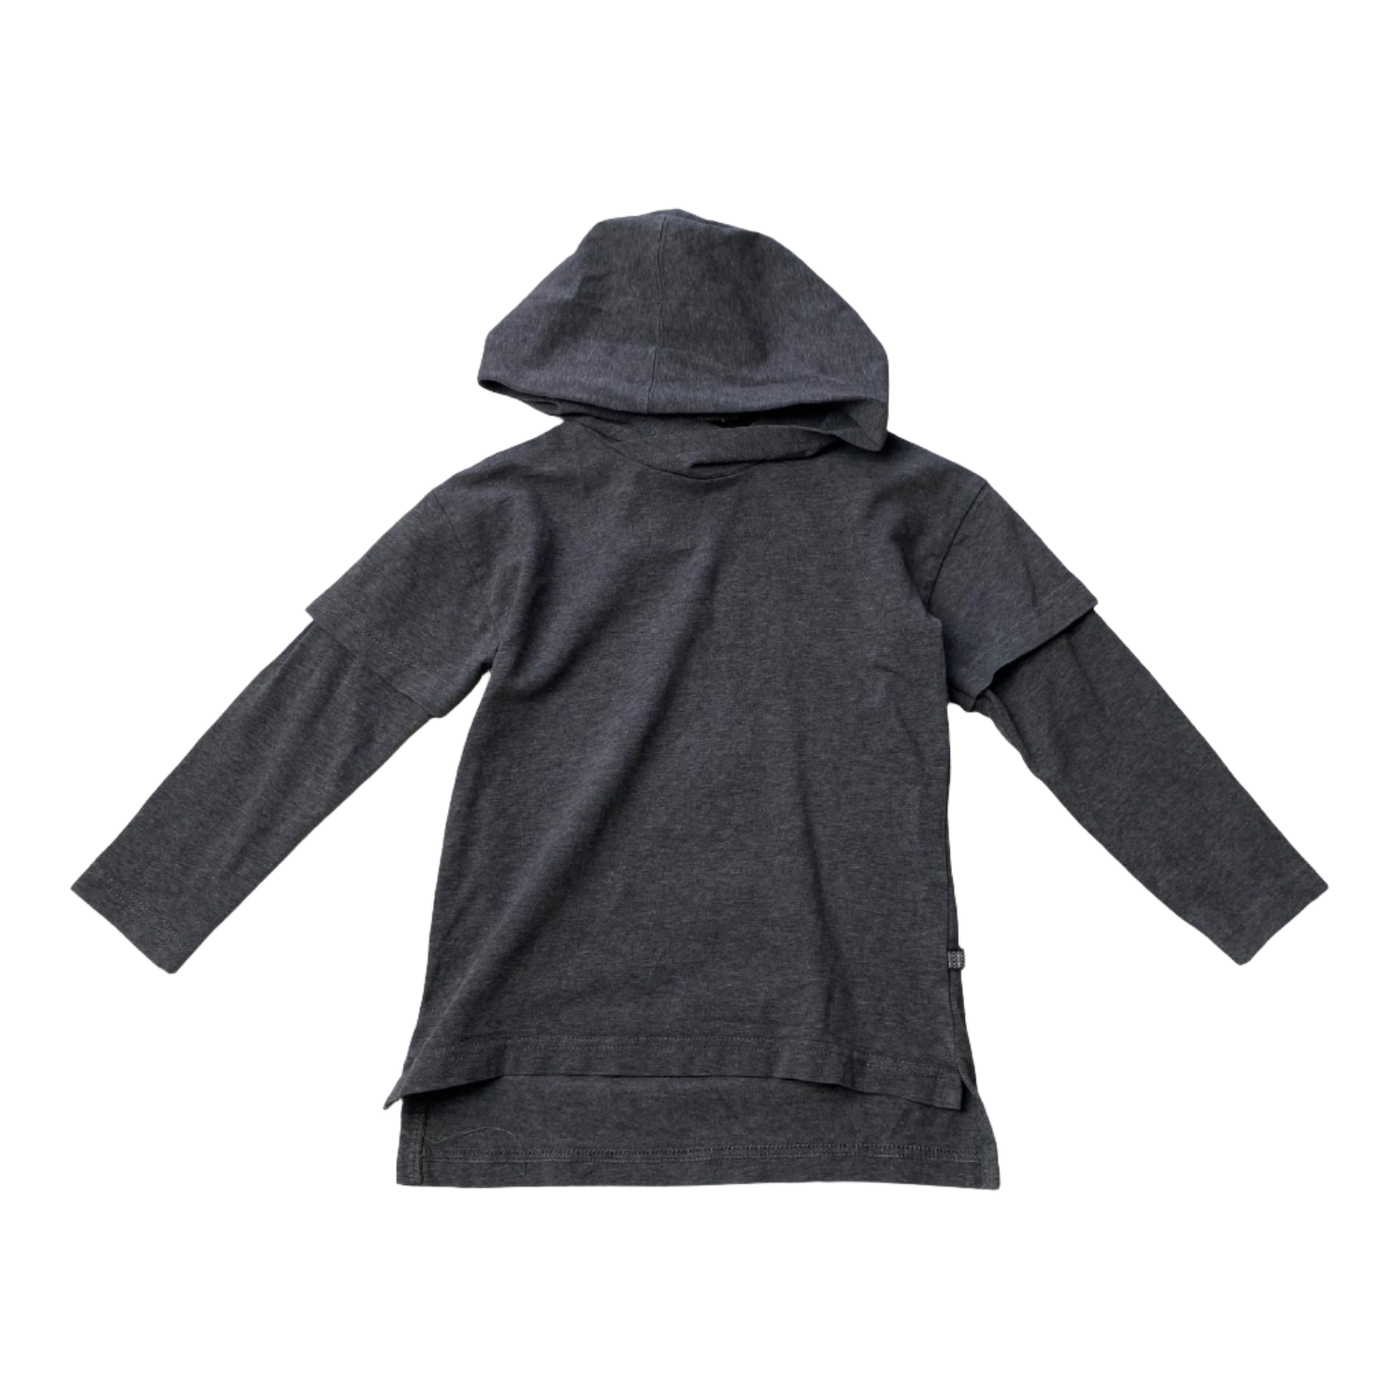 Kaiko hooded shirt, grey | 86/92cm